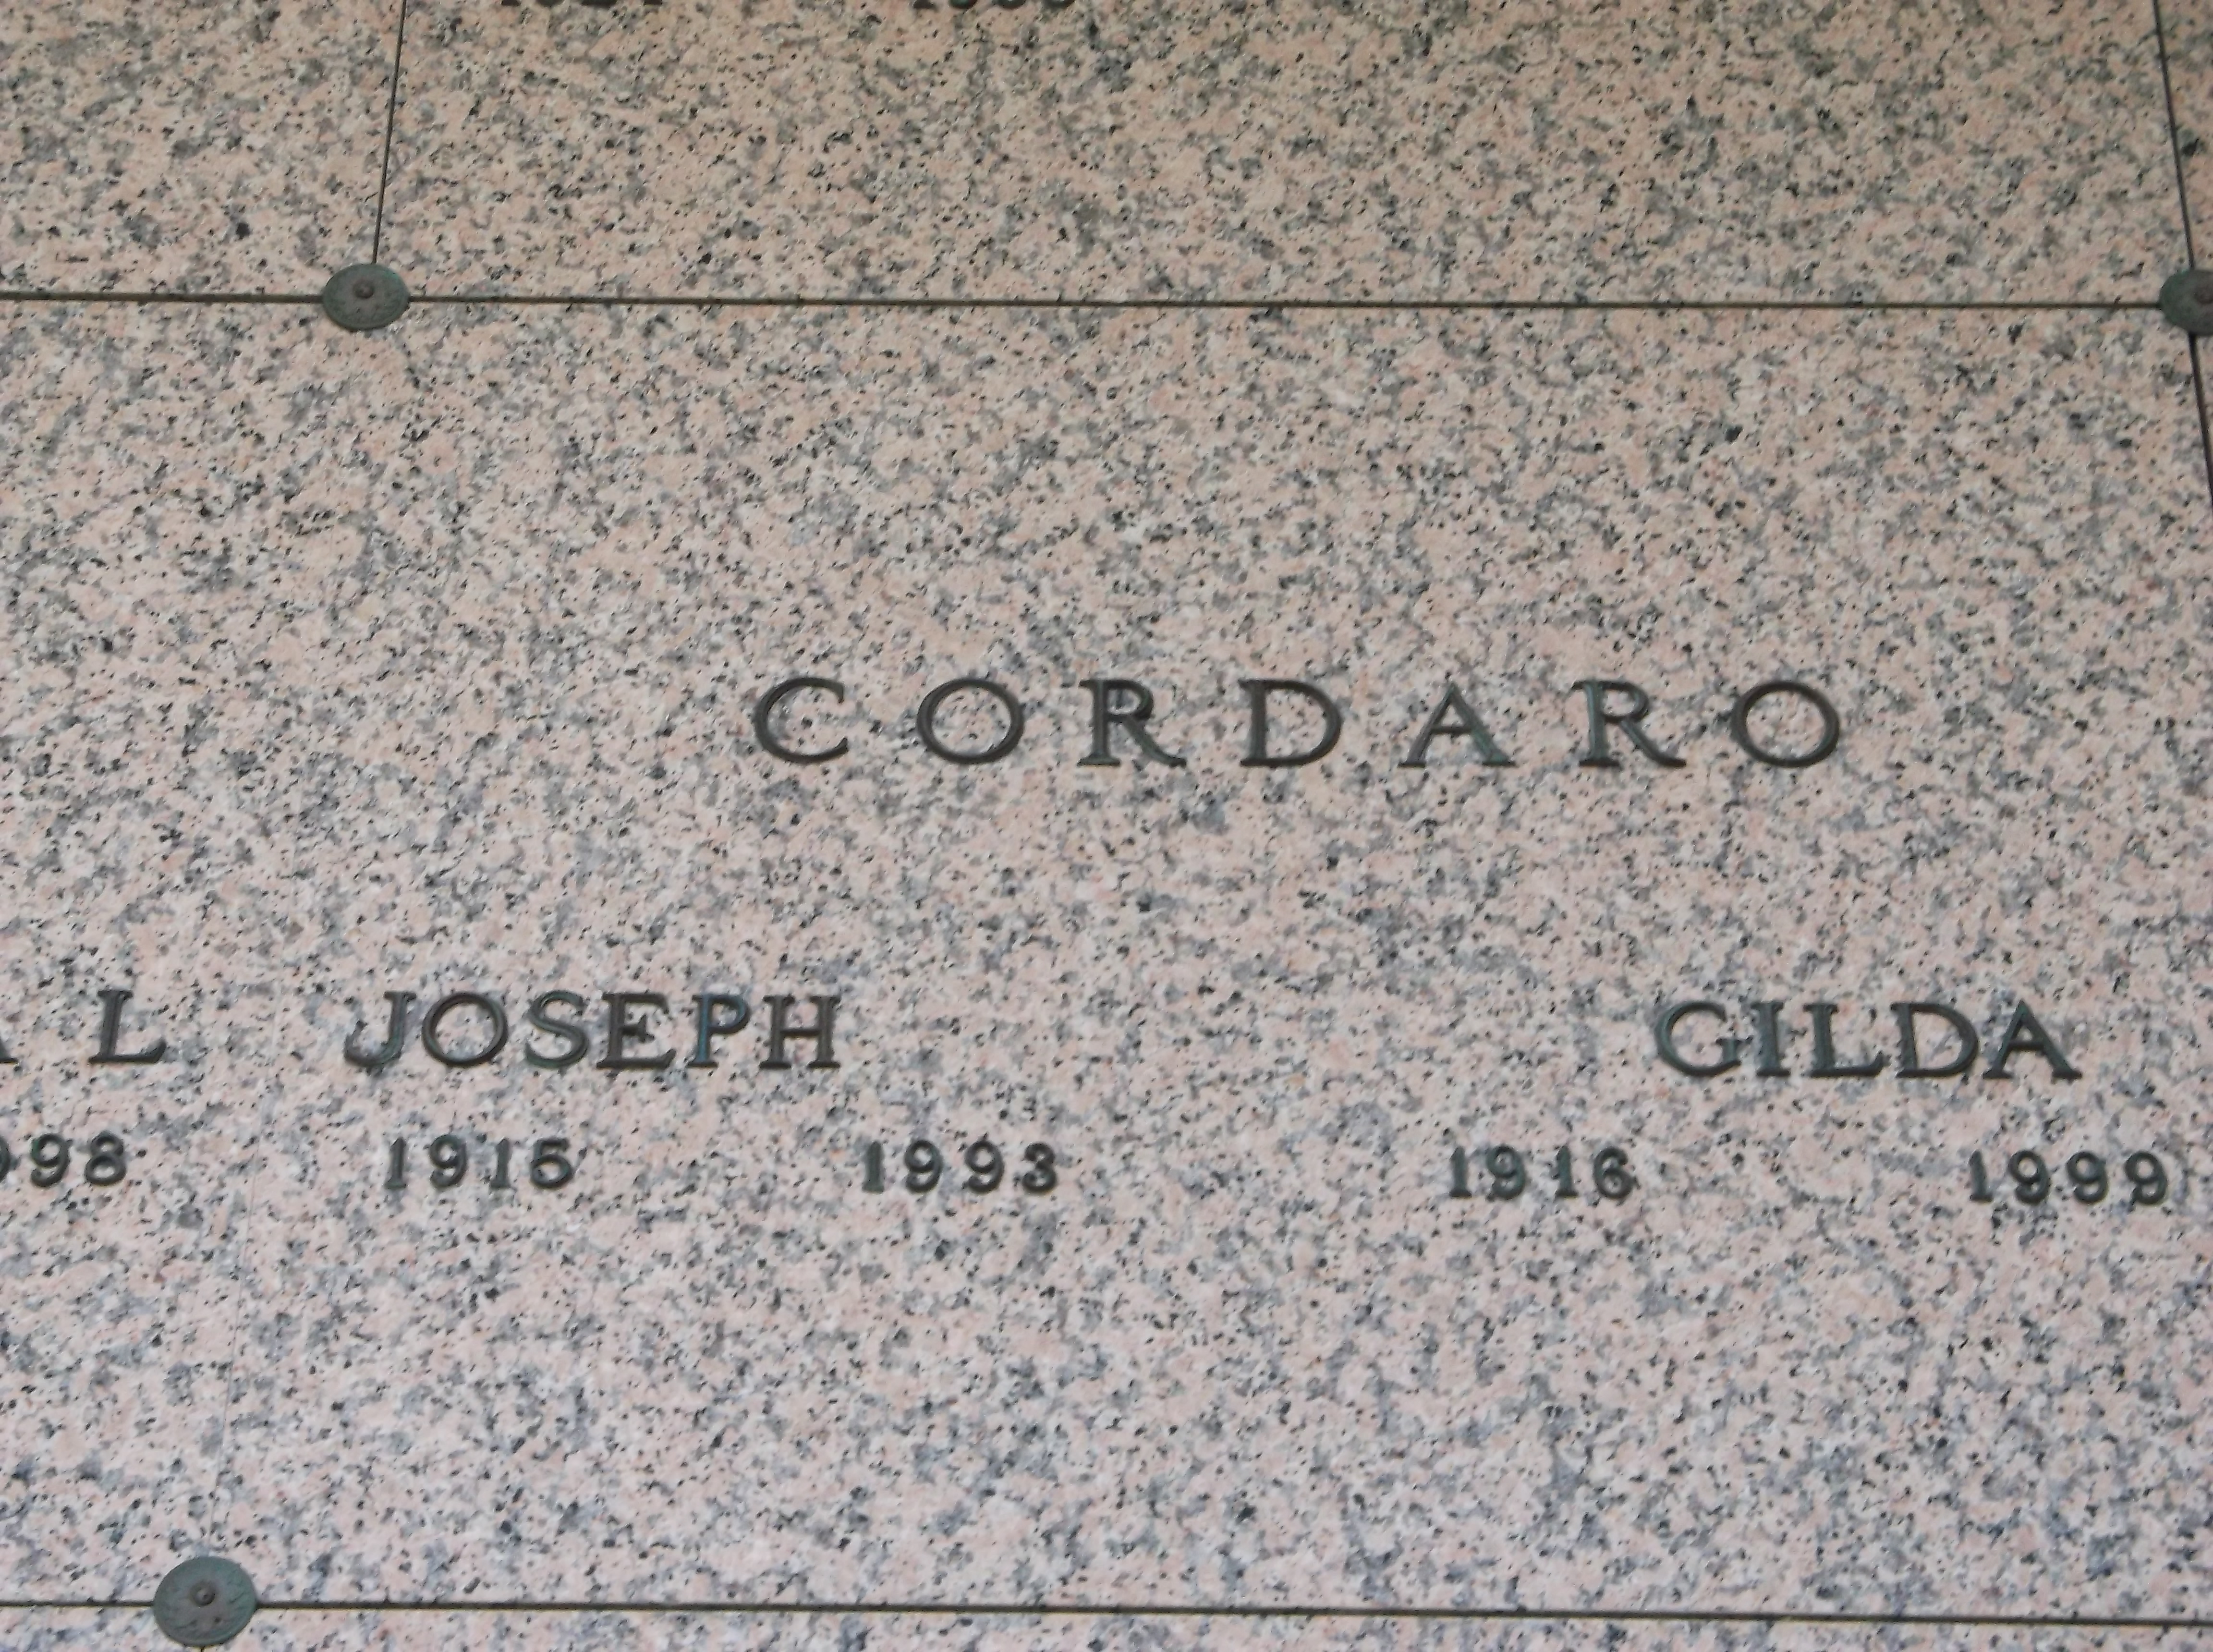 Joseph Cordaro